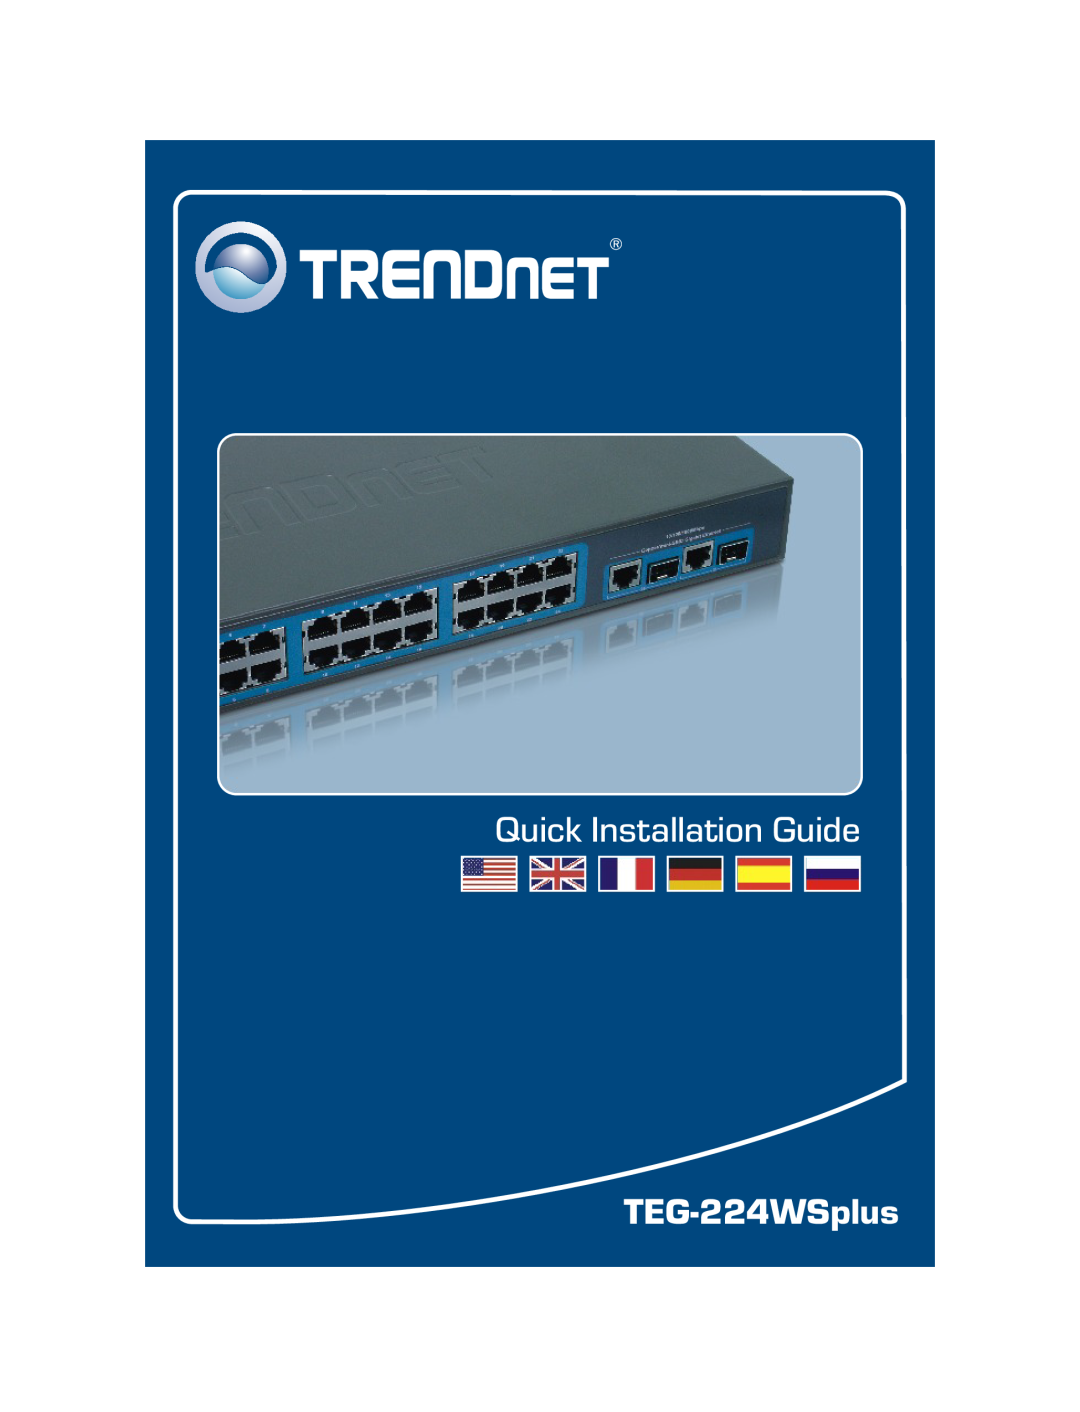 TRENDnet manual Quick Installation Guide, TEG-224WSplus 